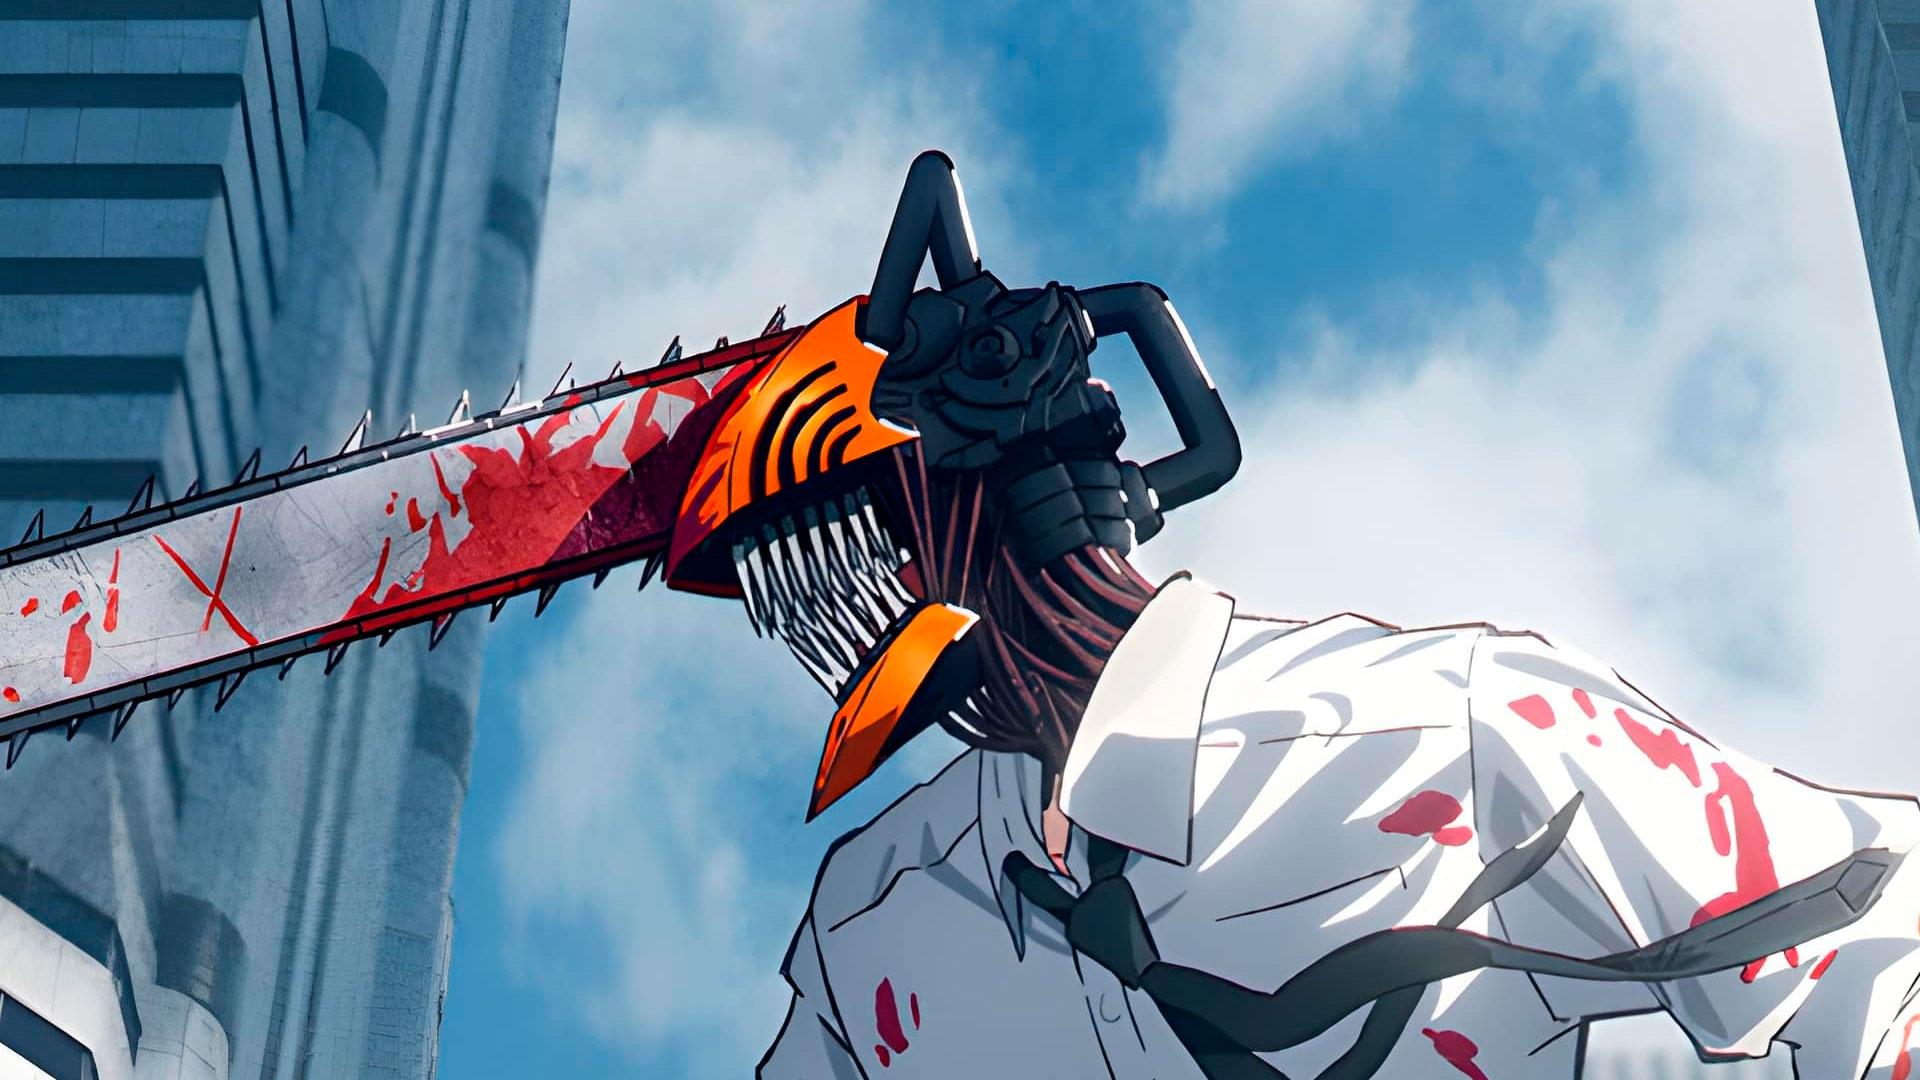 Chainsaw Man  Revista japonesa traz visual inédito do anime